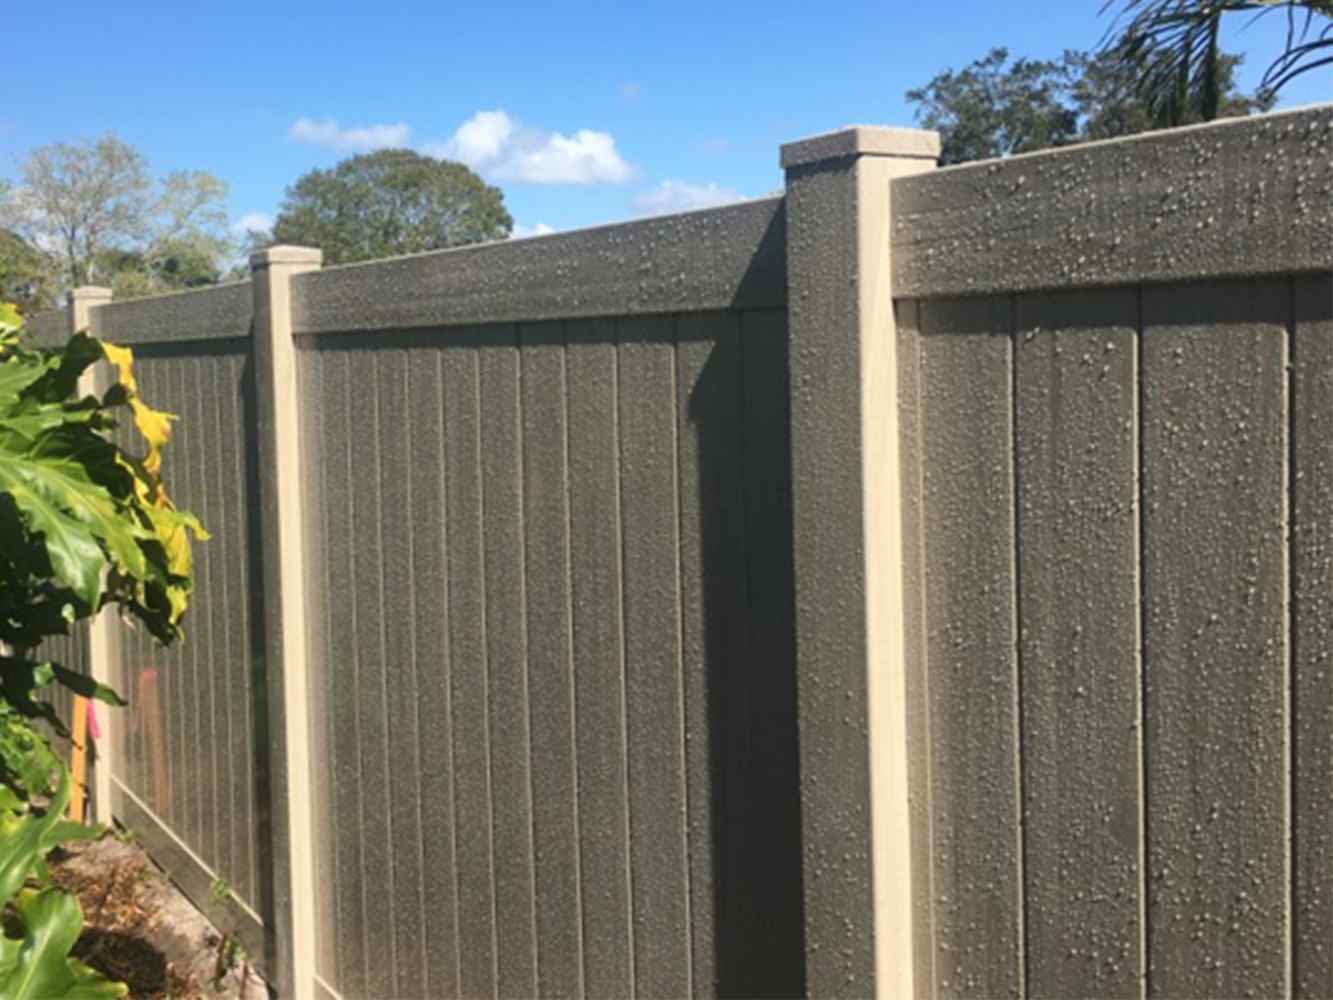 Photo of vinyl fence materials in Sarasota, Florida